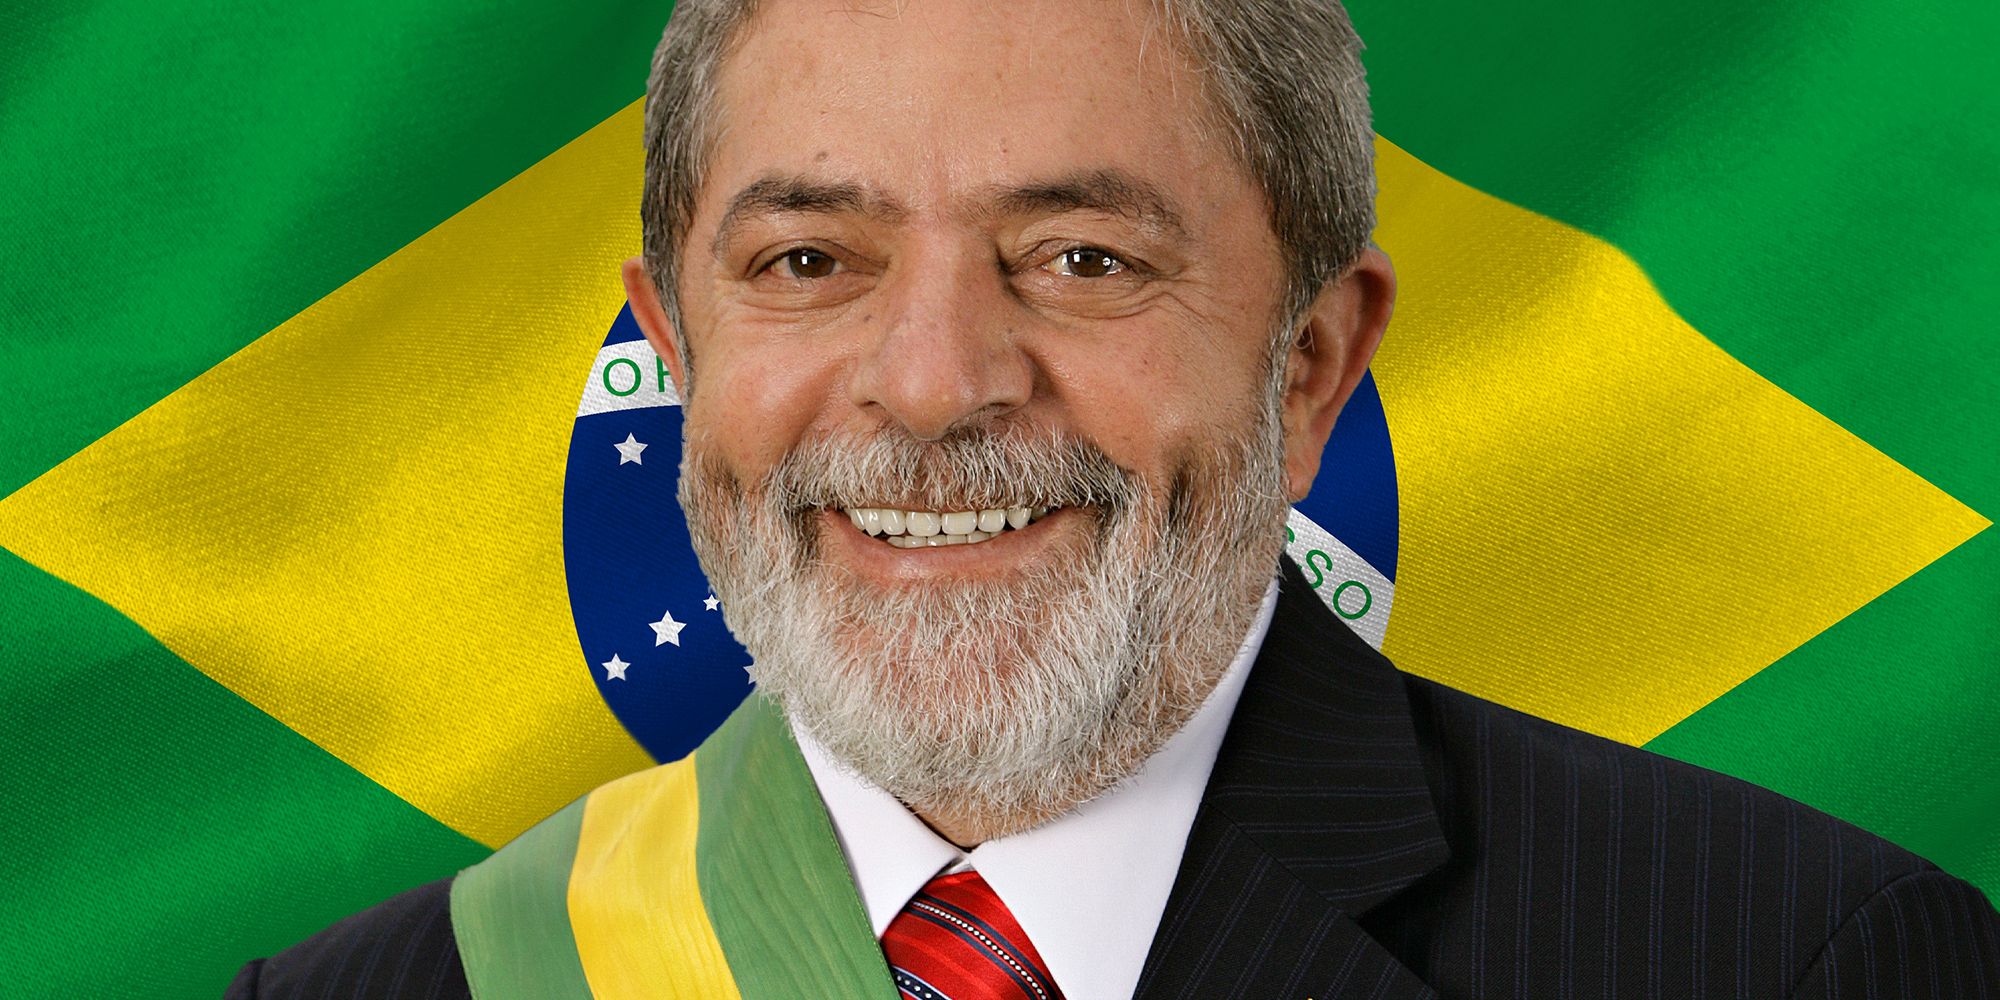 Brazil president Luiz Inácio Lula da Silva in front of the Brazil flag